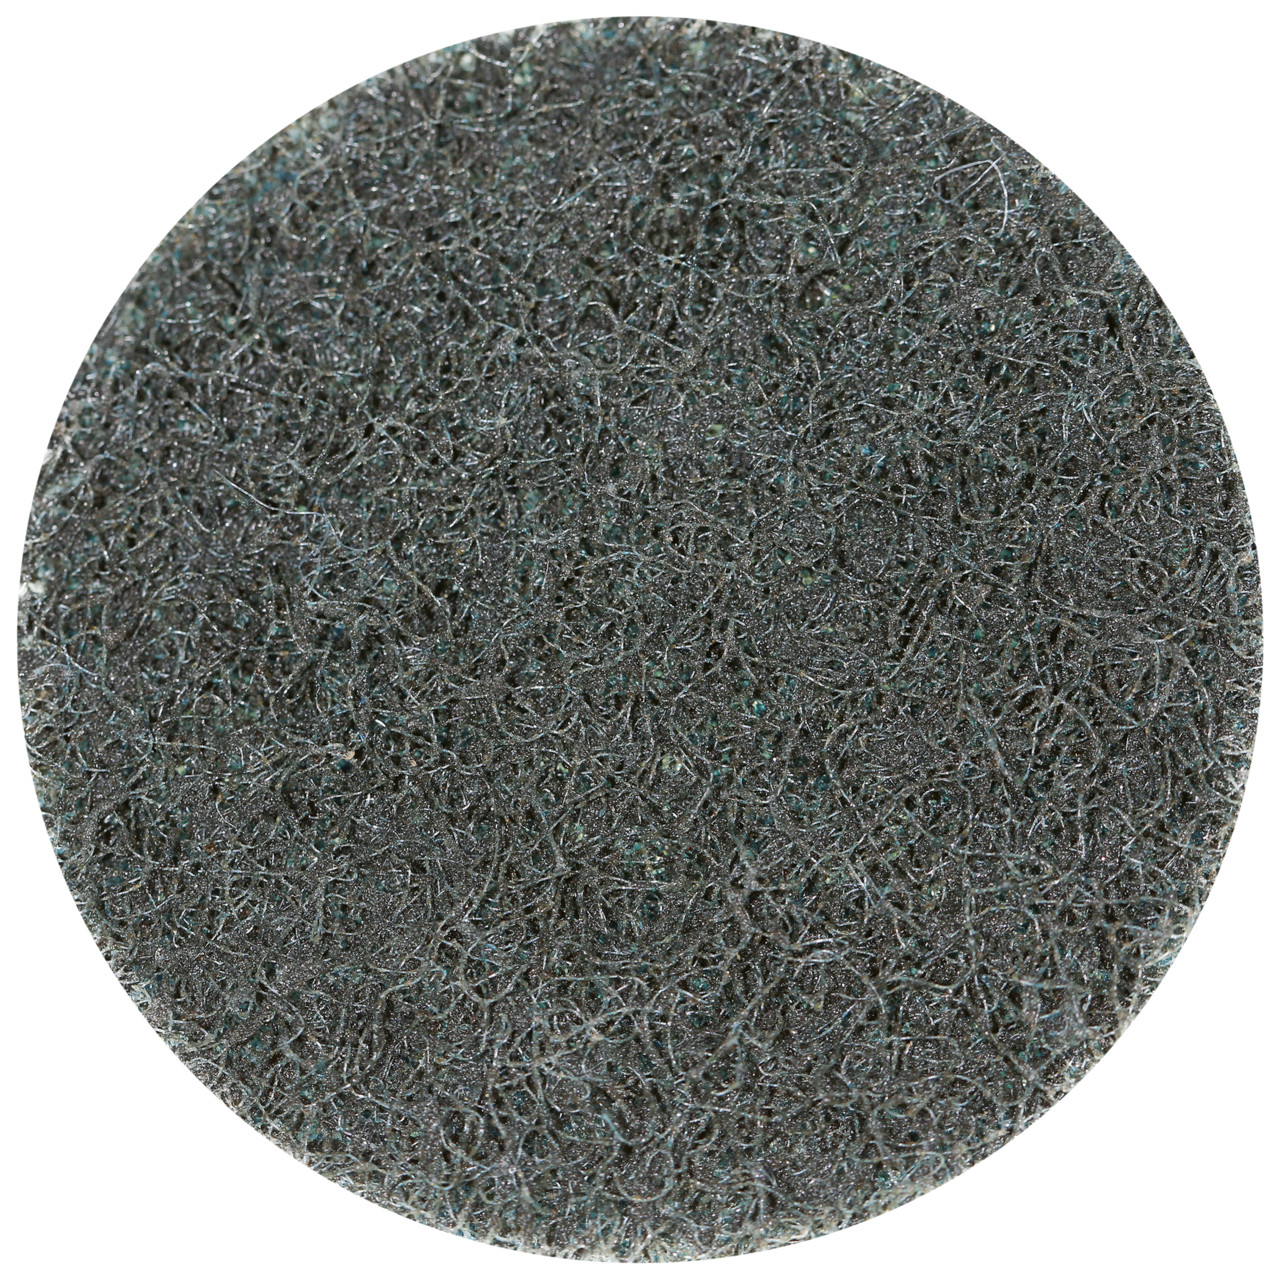 Tyrolit SCM QUICK CHANGE DISC Dimensione 50xR Per acciaio, acciaio inox, metalli non ferrosi, plastica e legno, EXTRA LARGE, forma: QDISC, Art. 34072695